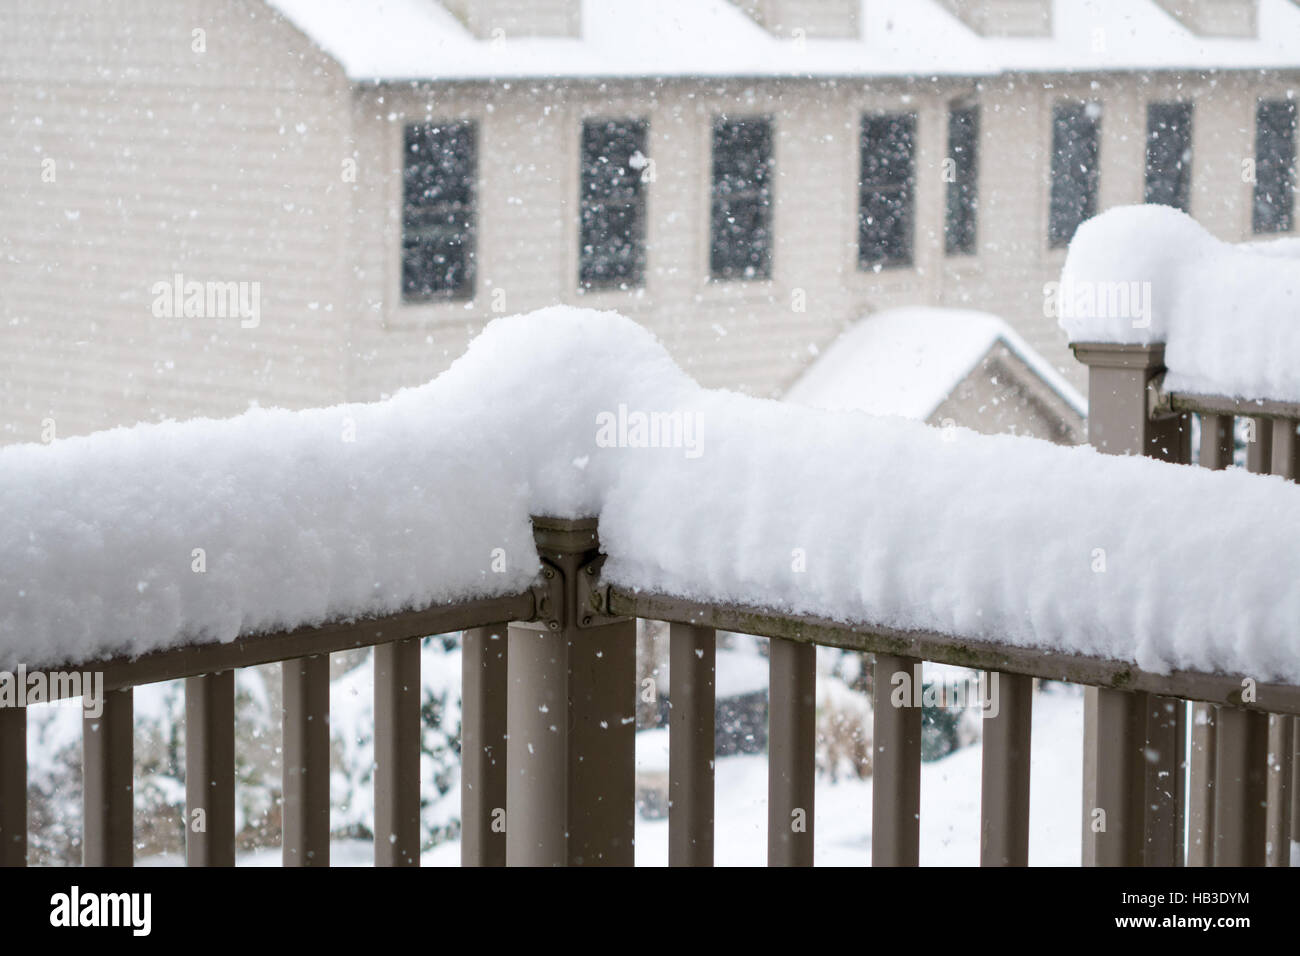 Snow piled high on railing of balcony Stock Photo